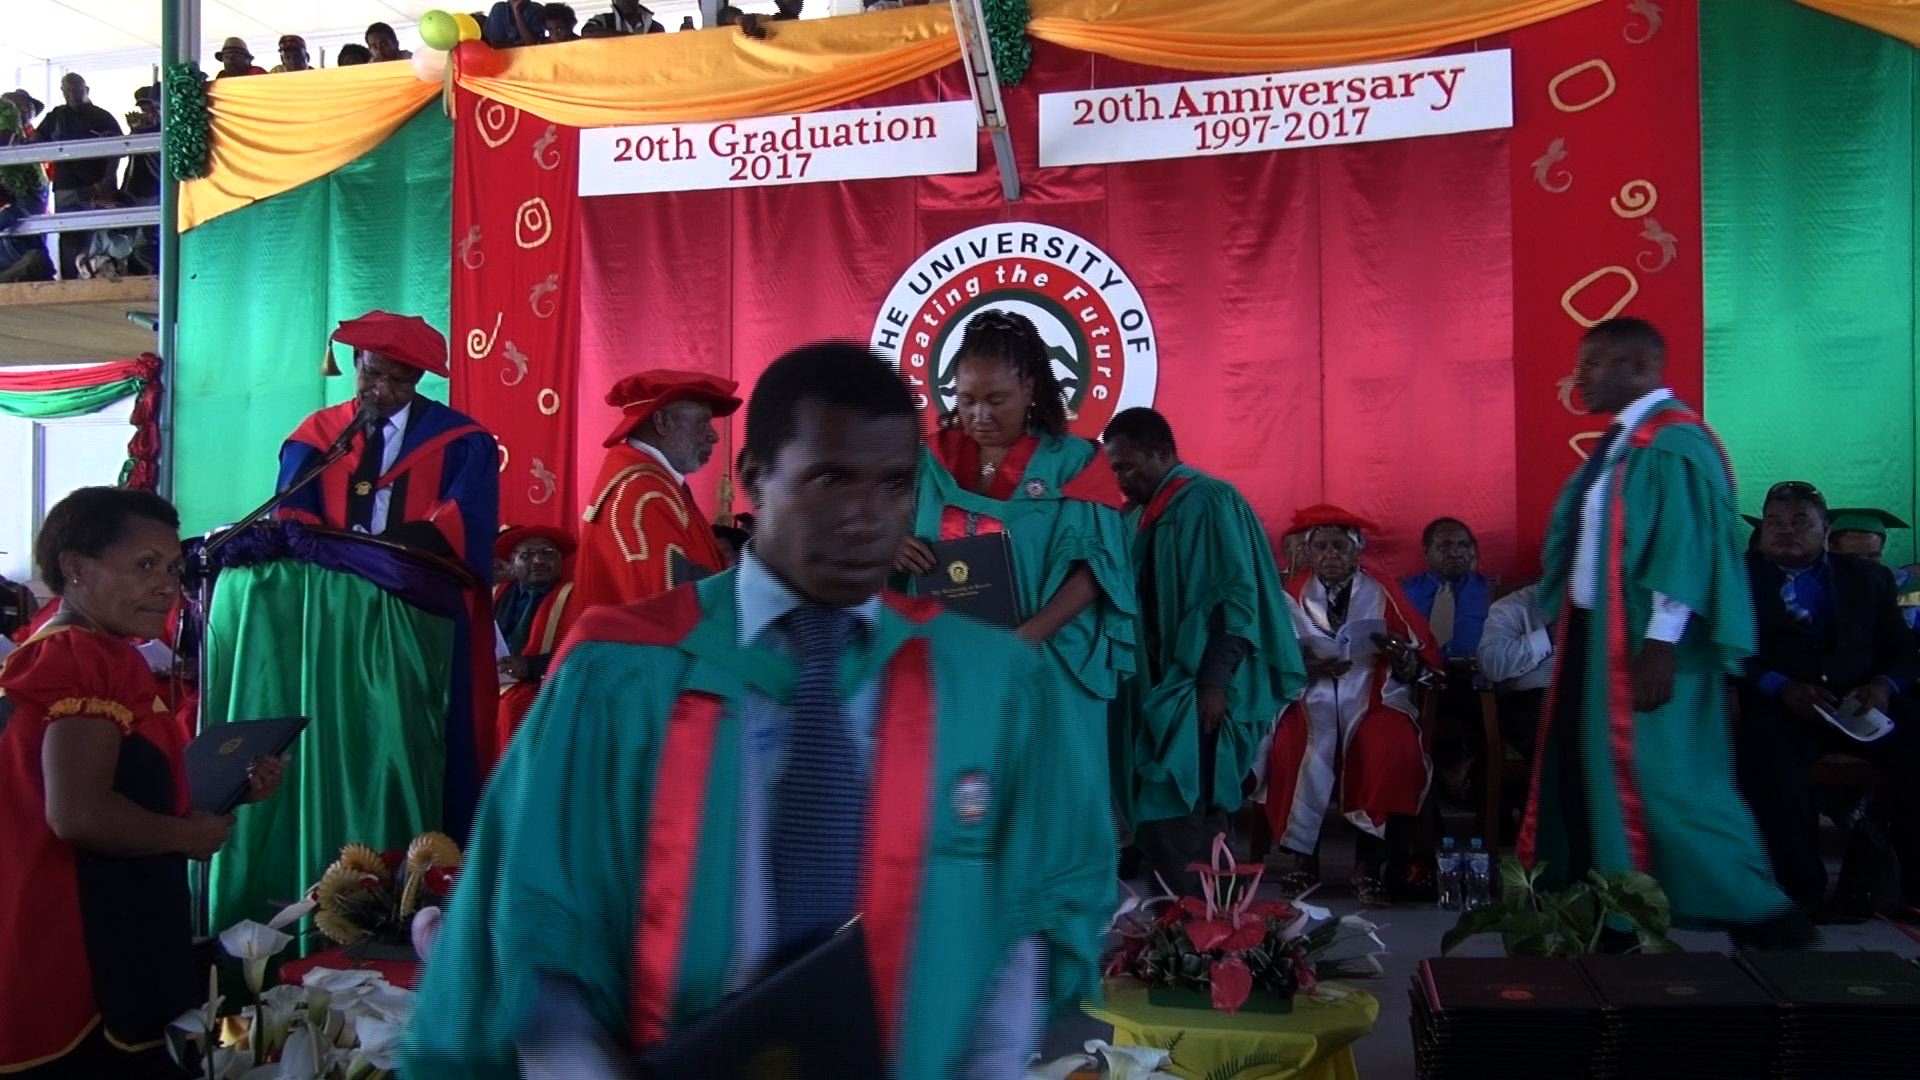 800 Graduate from the University of Goroka - EMTV Online